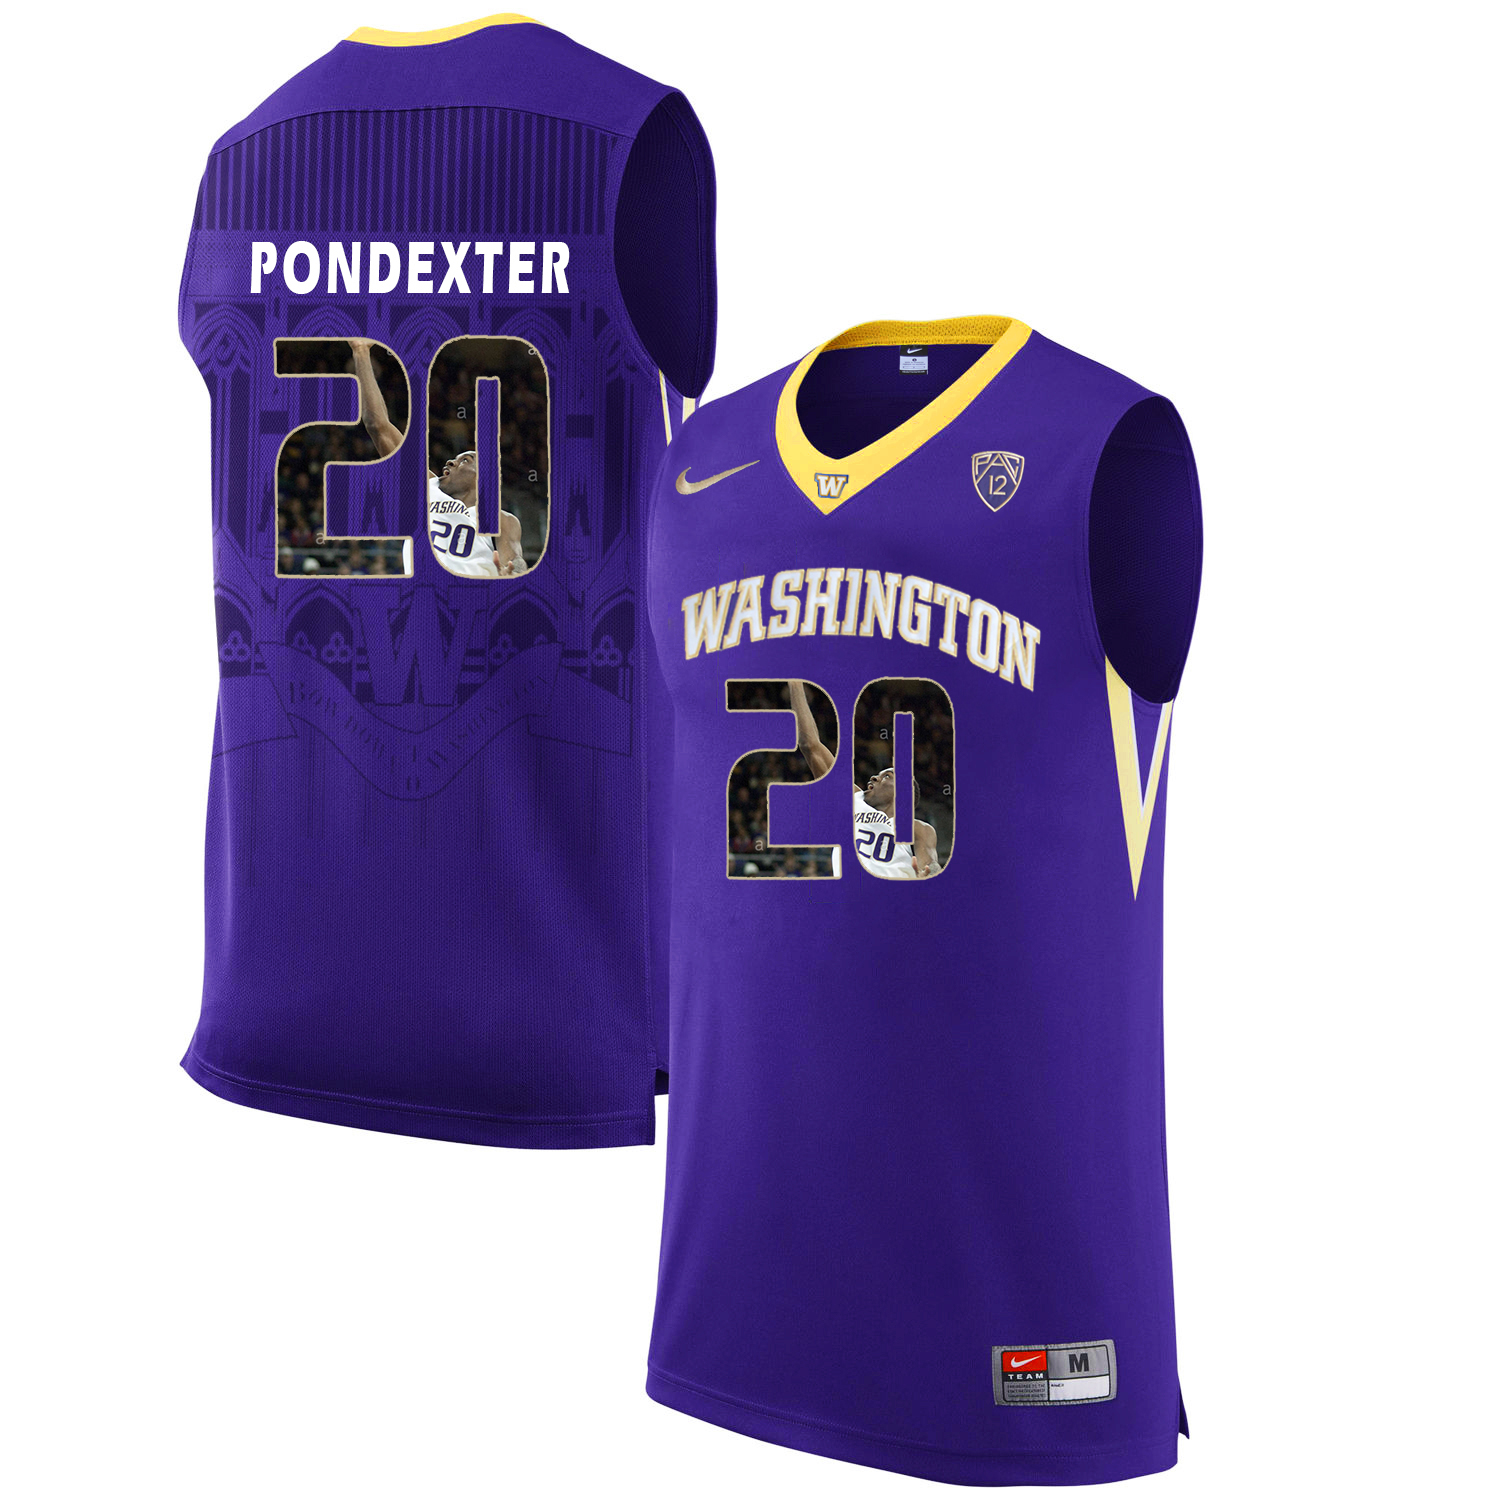 Washington Huskies 20 Quincy Pondexter Purple With Portait College Basketball Jersey